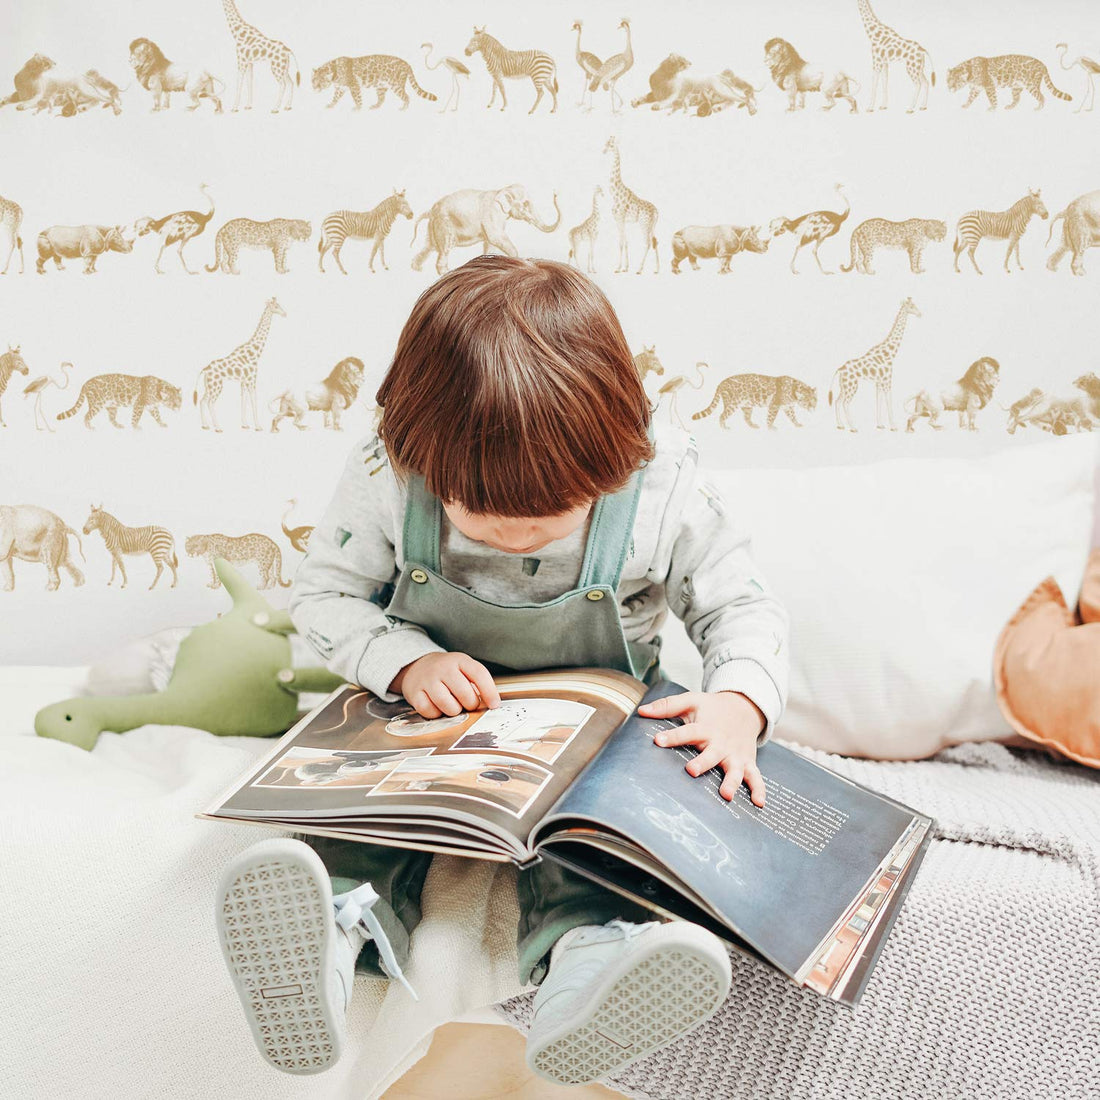 safari themed animal print wallpaper design in beige for neutral kids bedroom